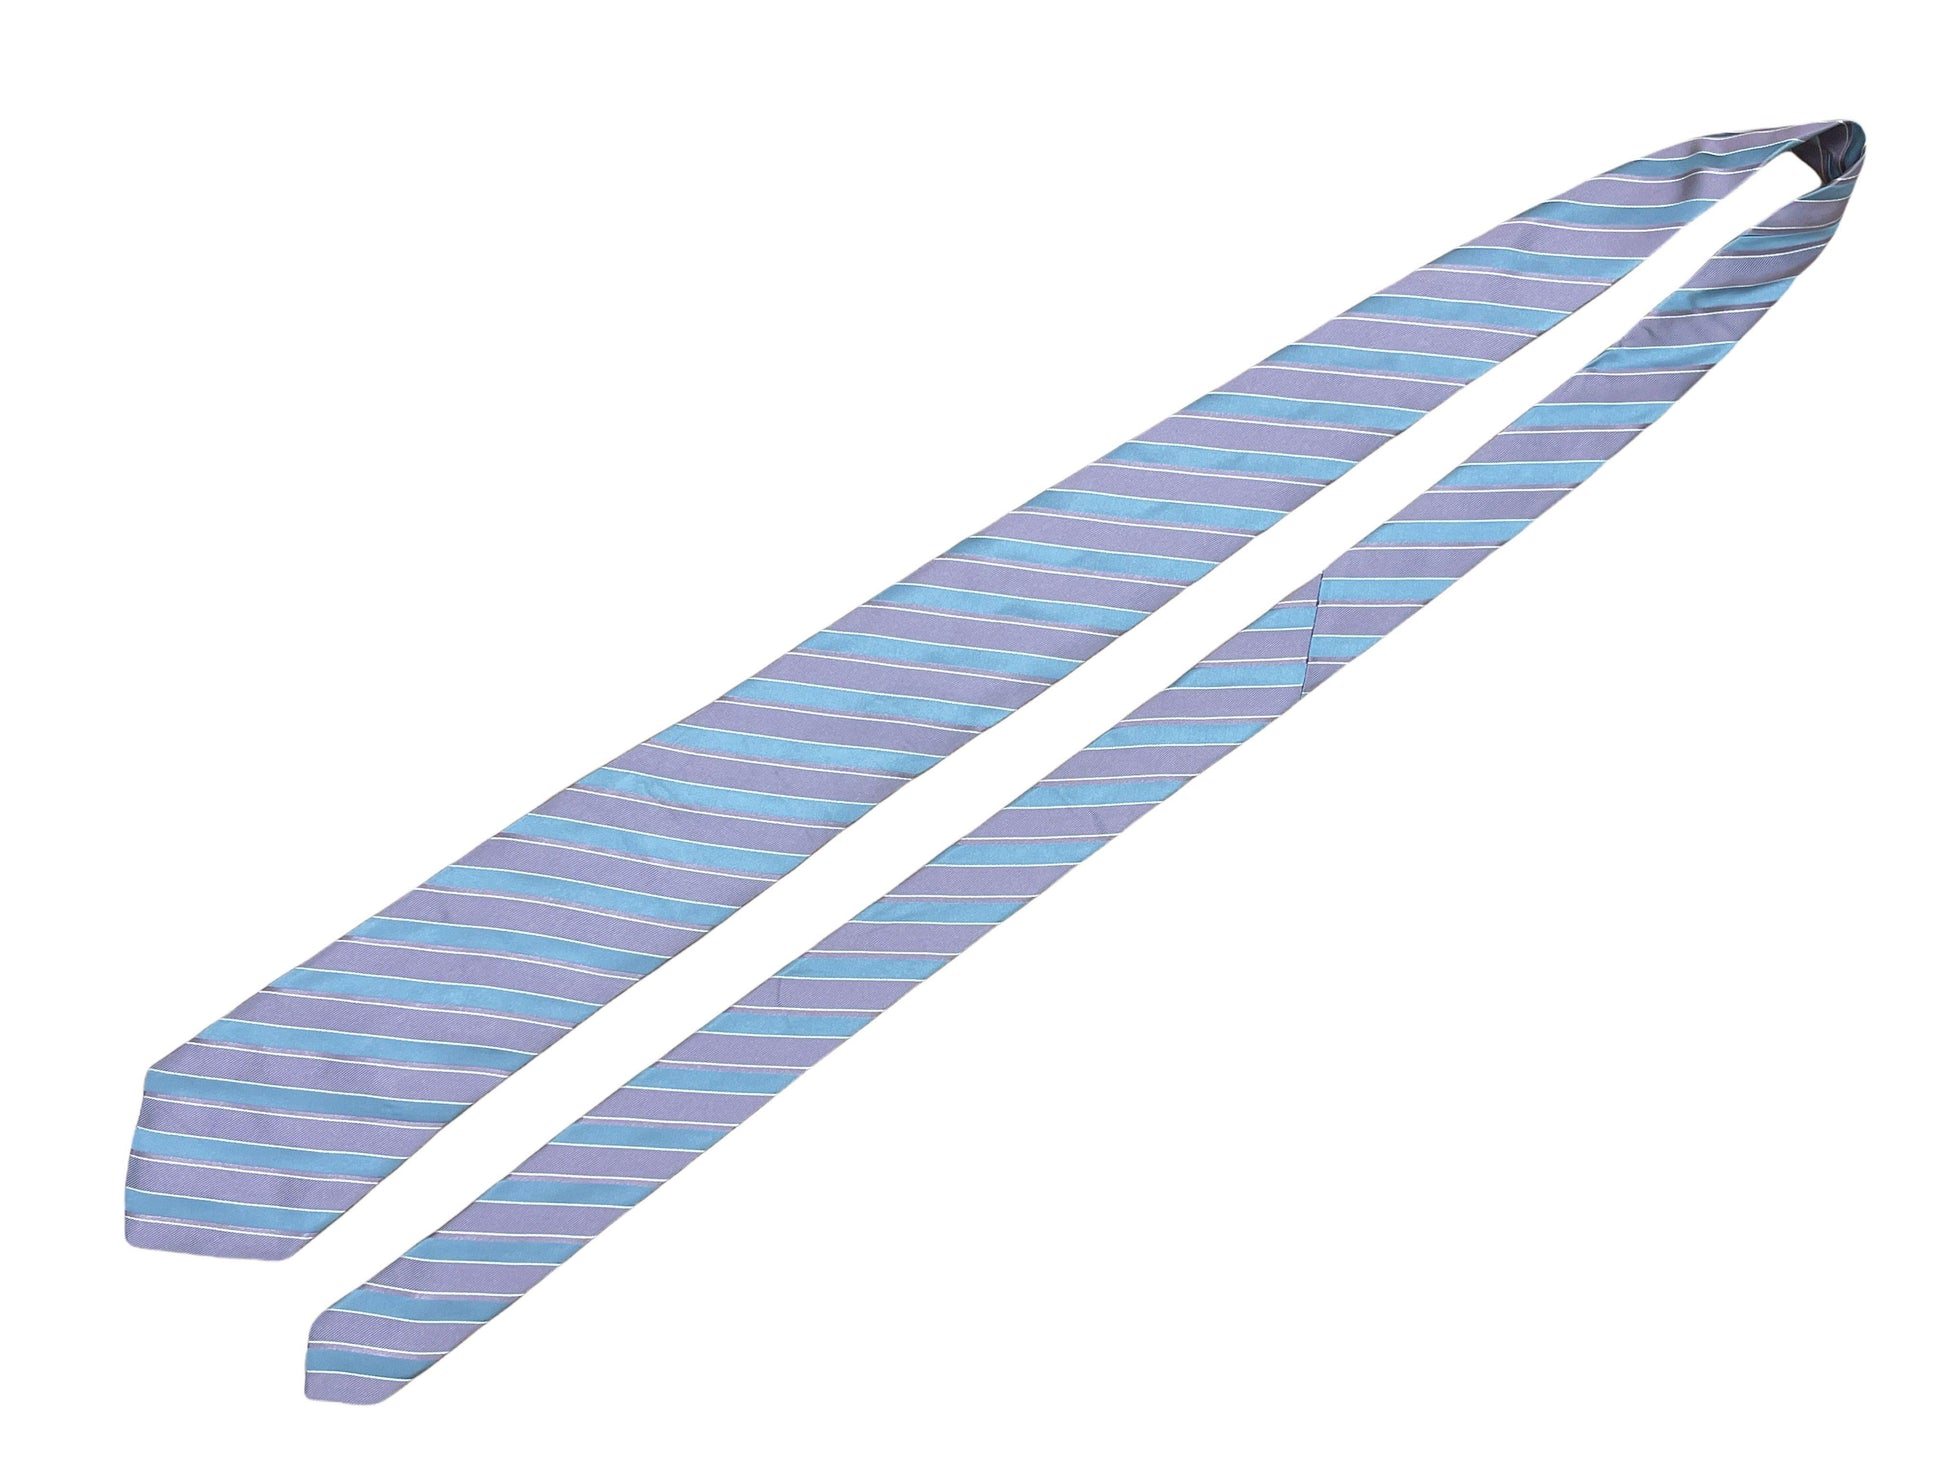 Hugo Boss purple and blue striped silk tie - Genuine Design